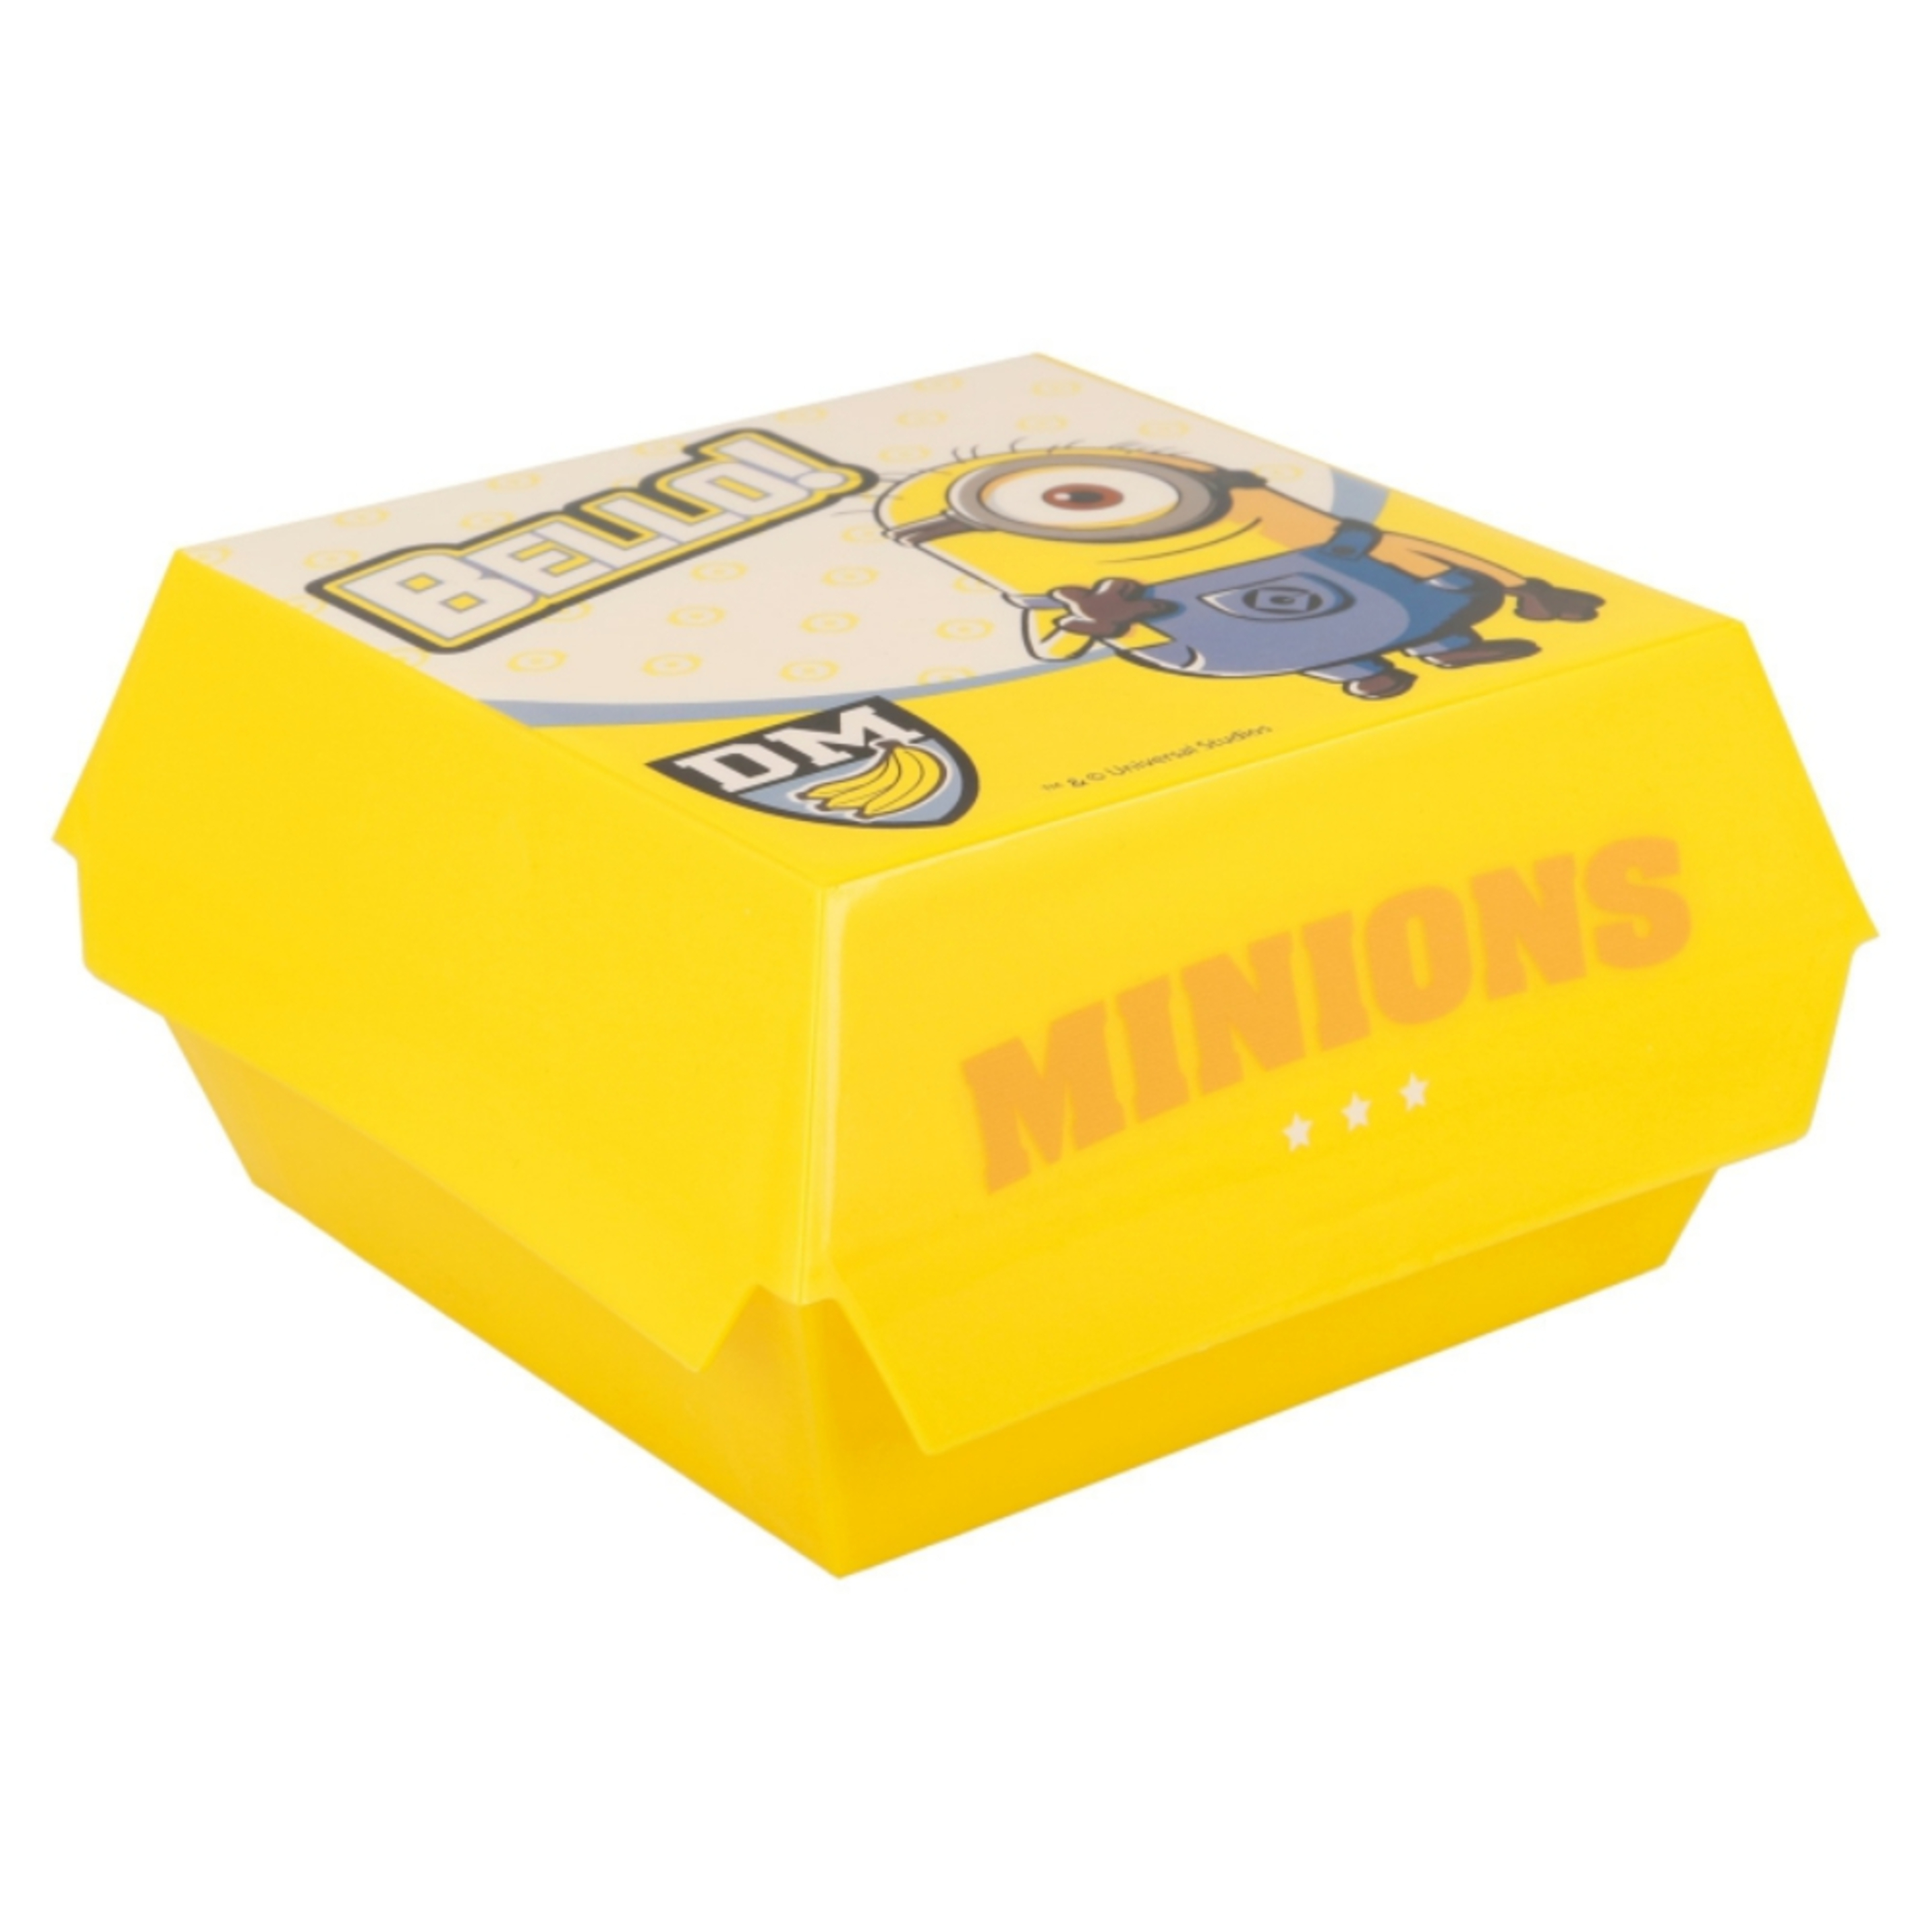 Sandwichera Minions 62177 - amarillo - 